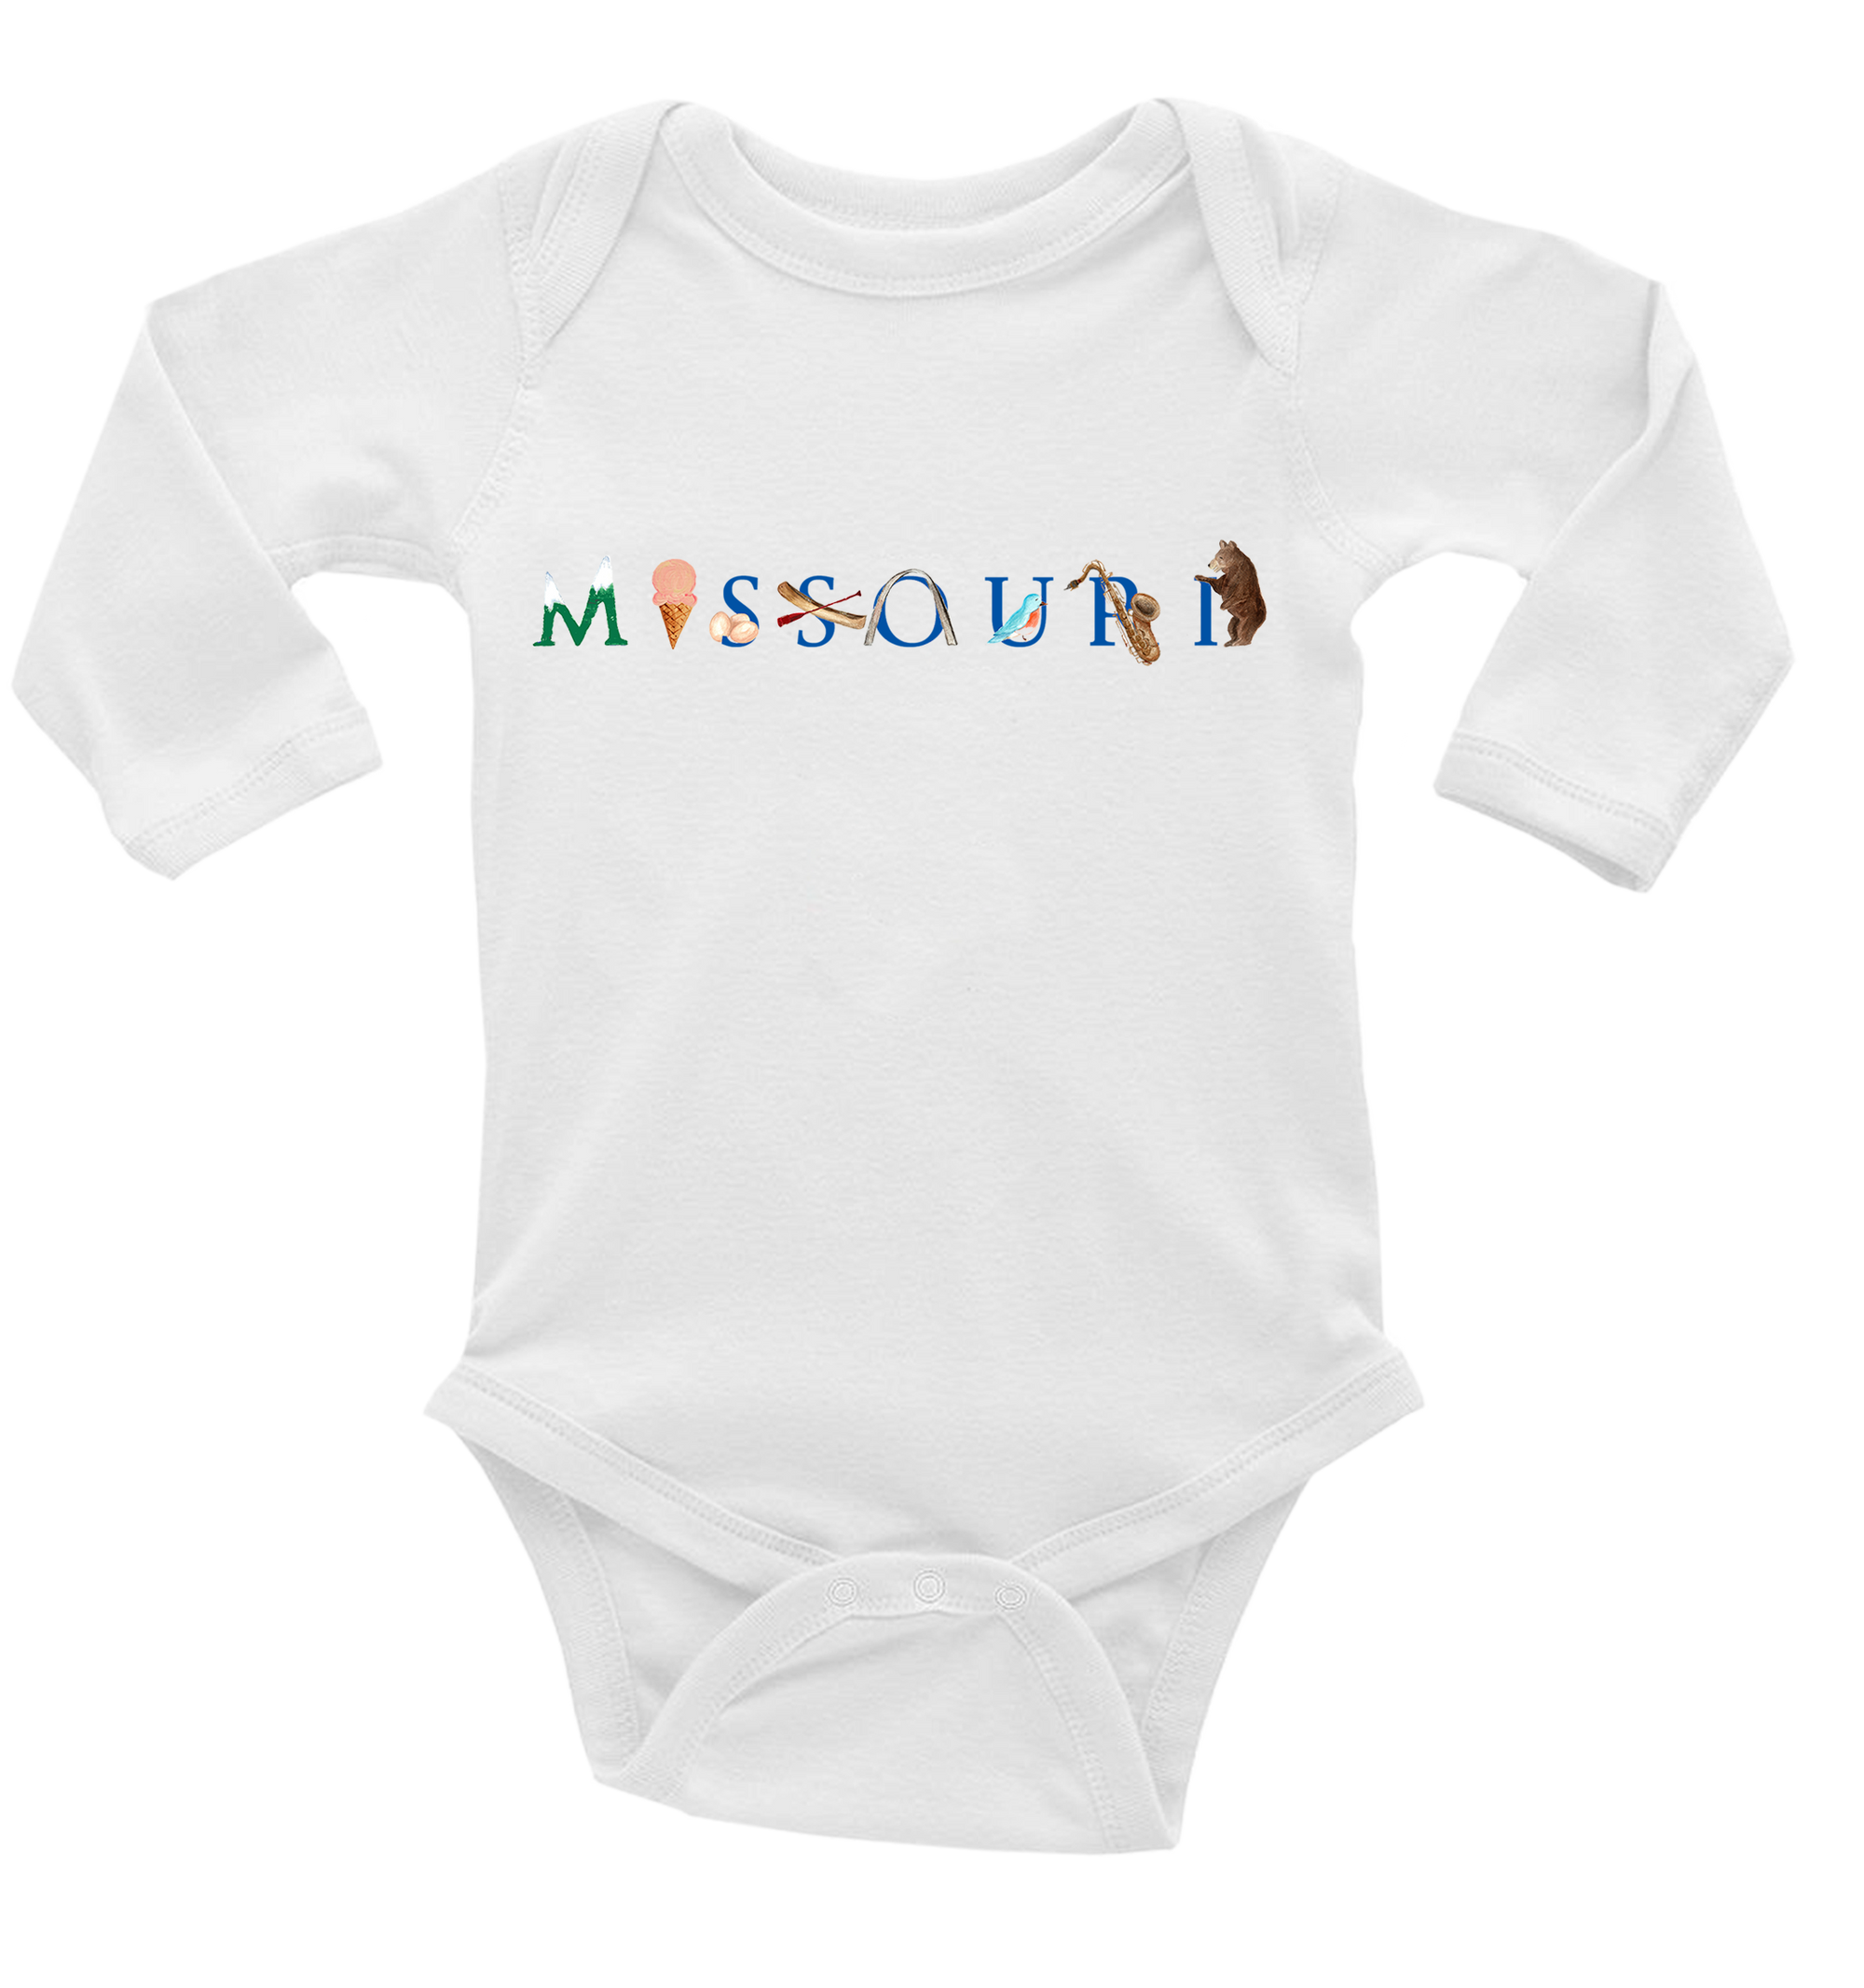 Missouri baby snap up long sleeve